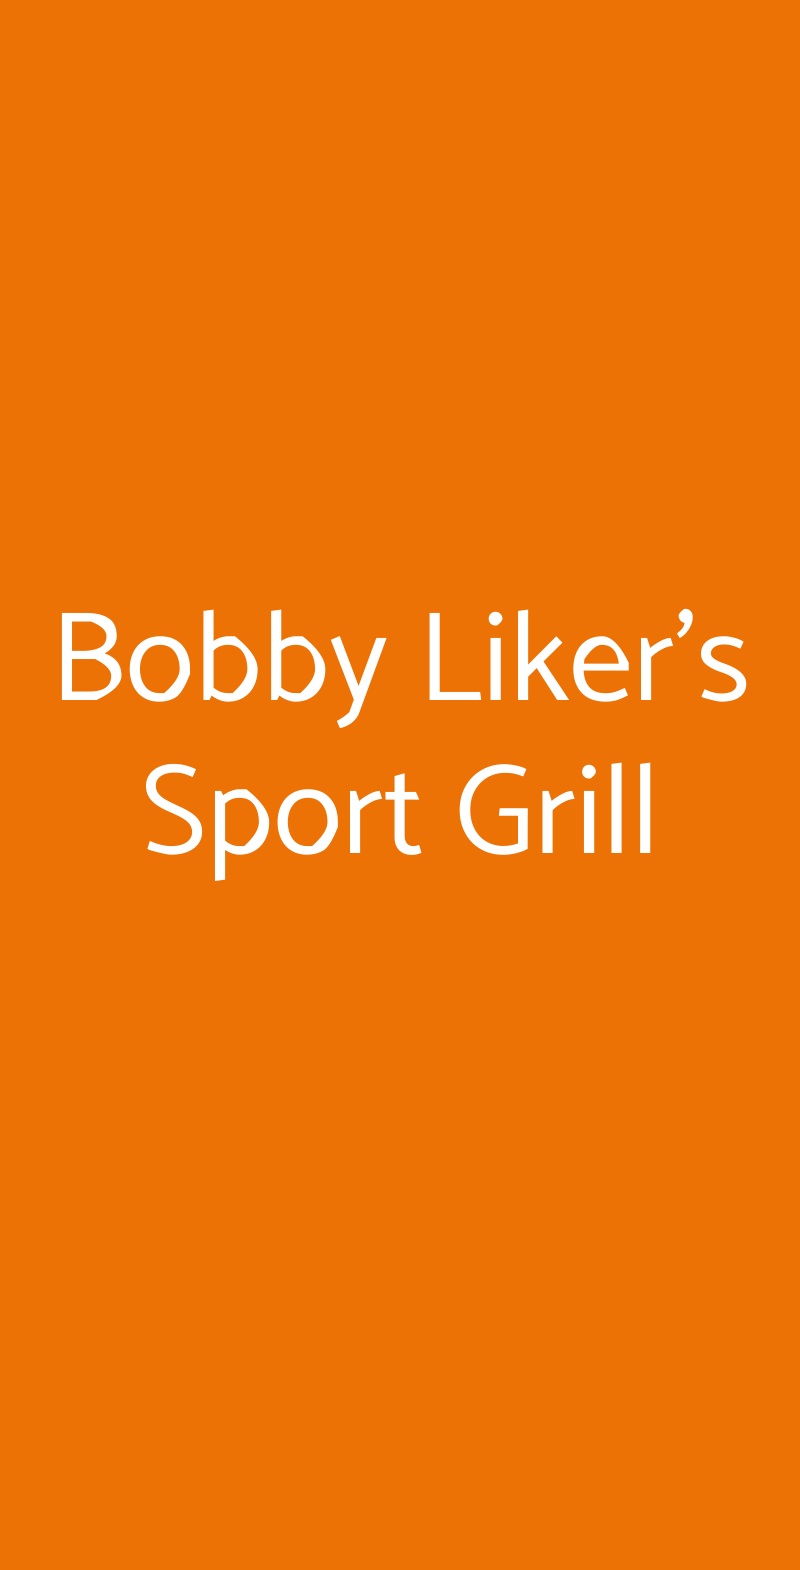 Bobby Liker's Sport Grill Forte Dei Marmi menù 1 pagina